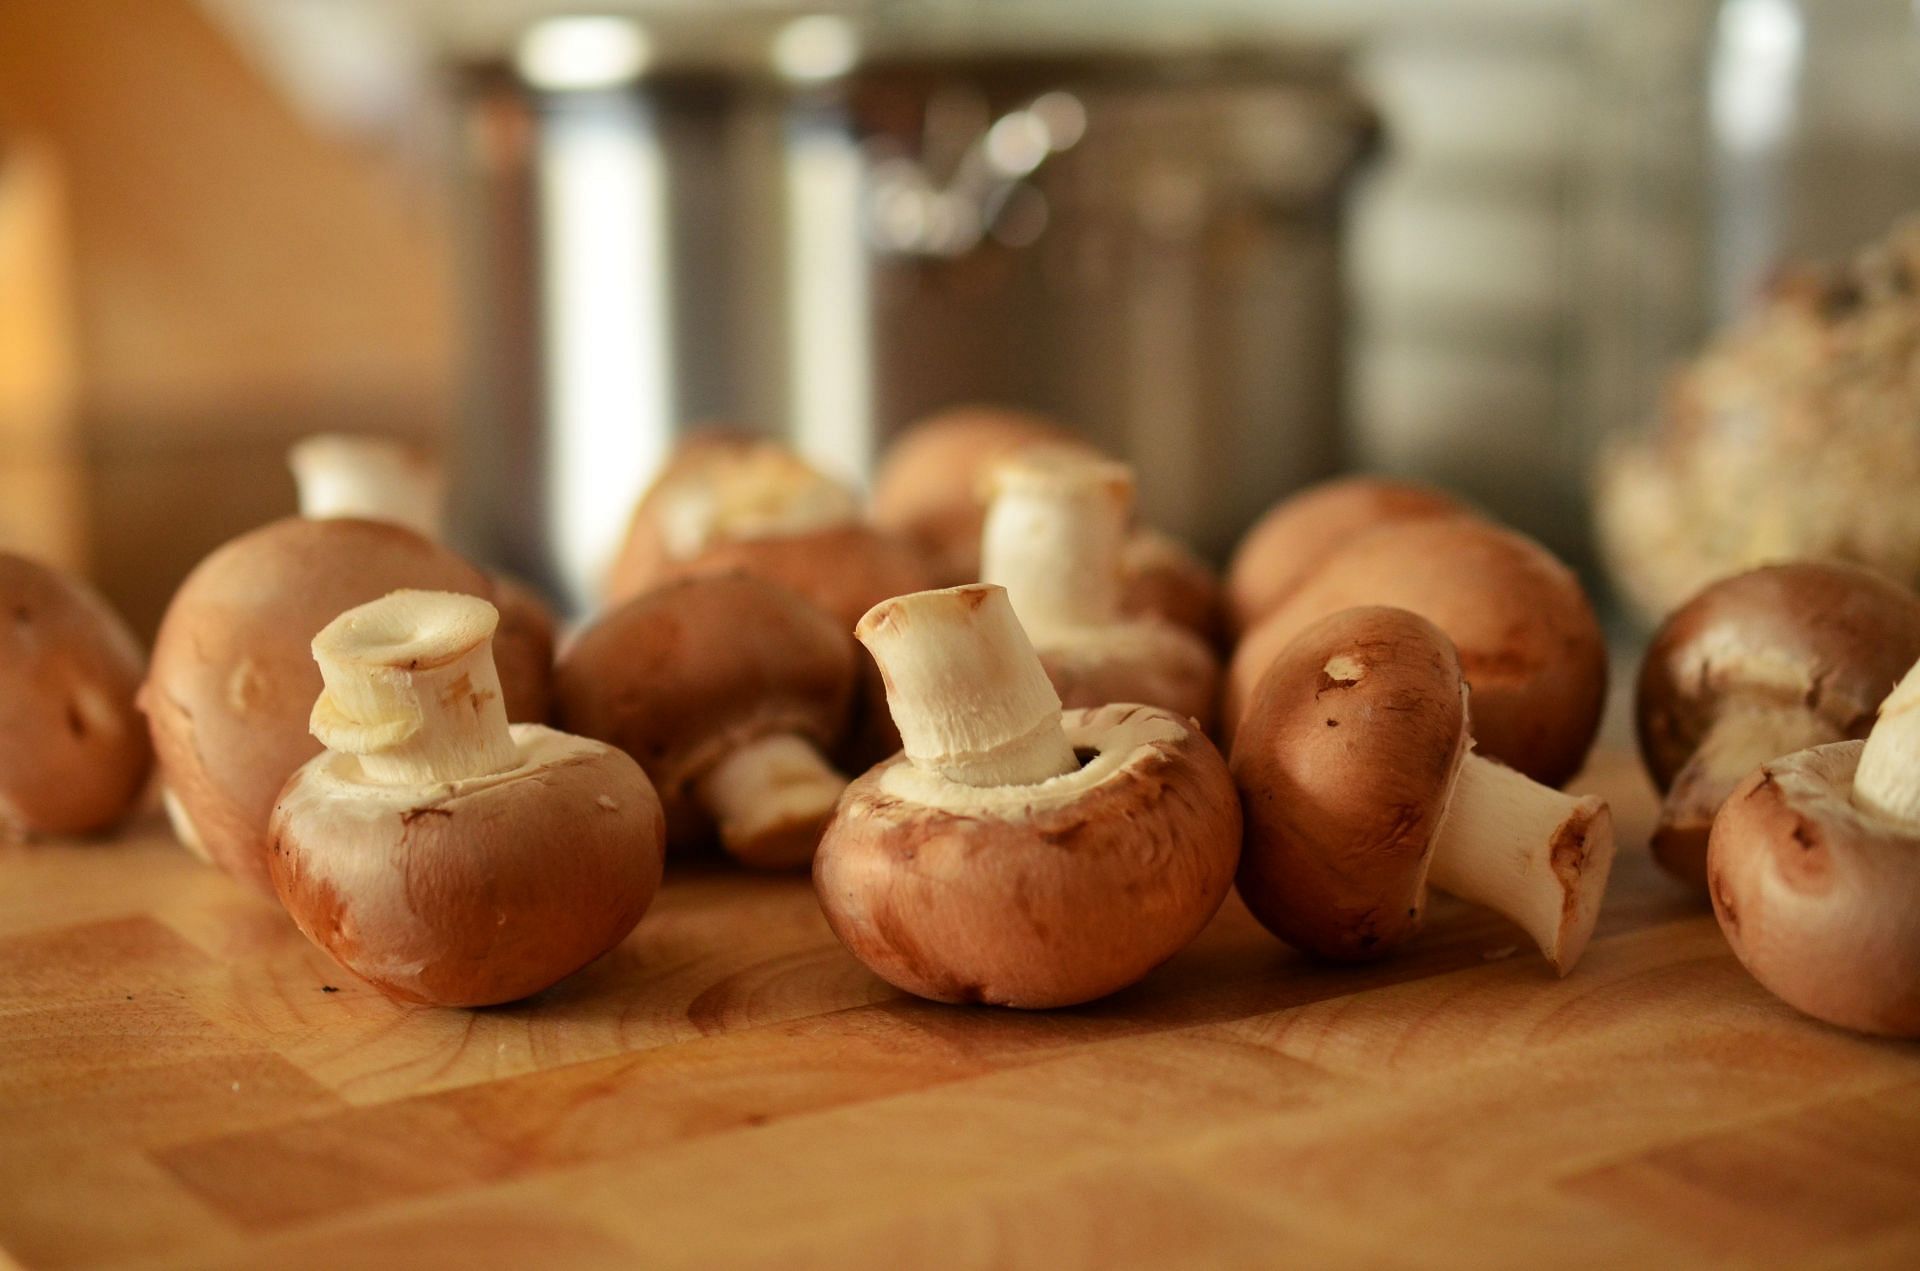 These mushrooms improve brain functions. (Image via Pexels/Pixabay)